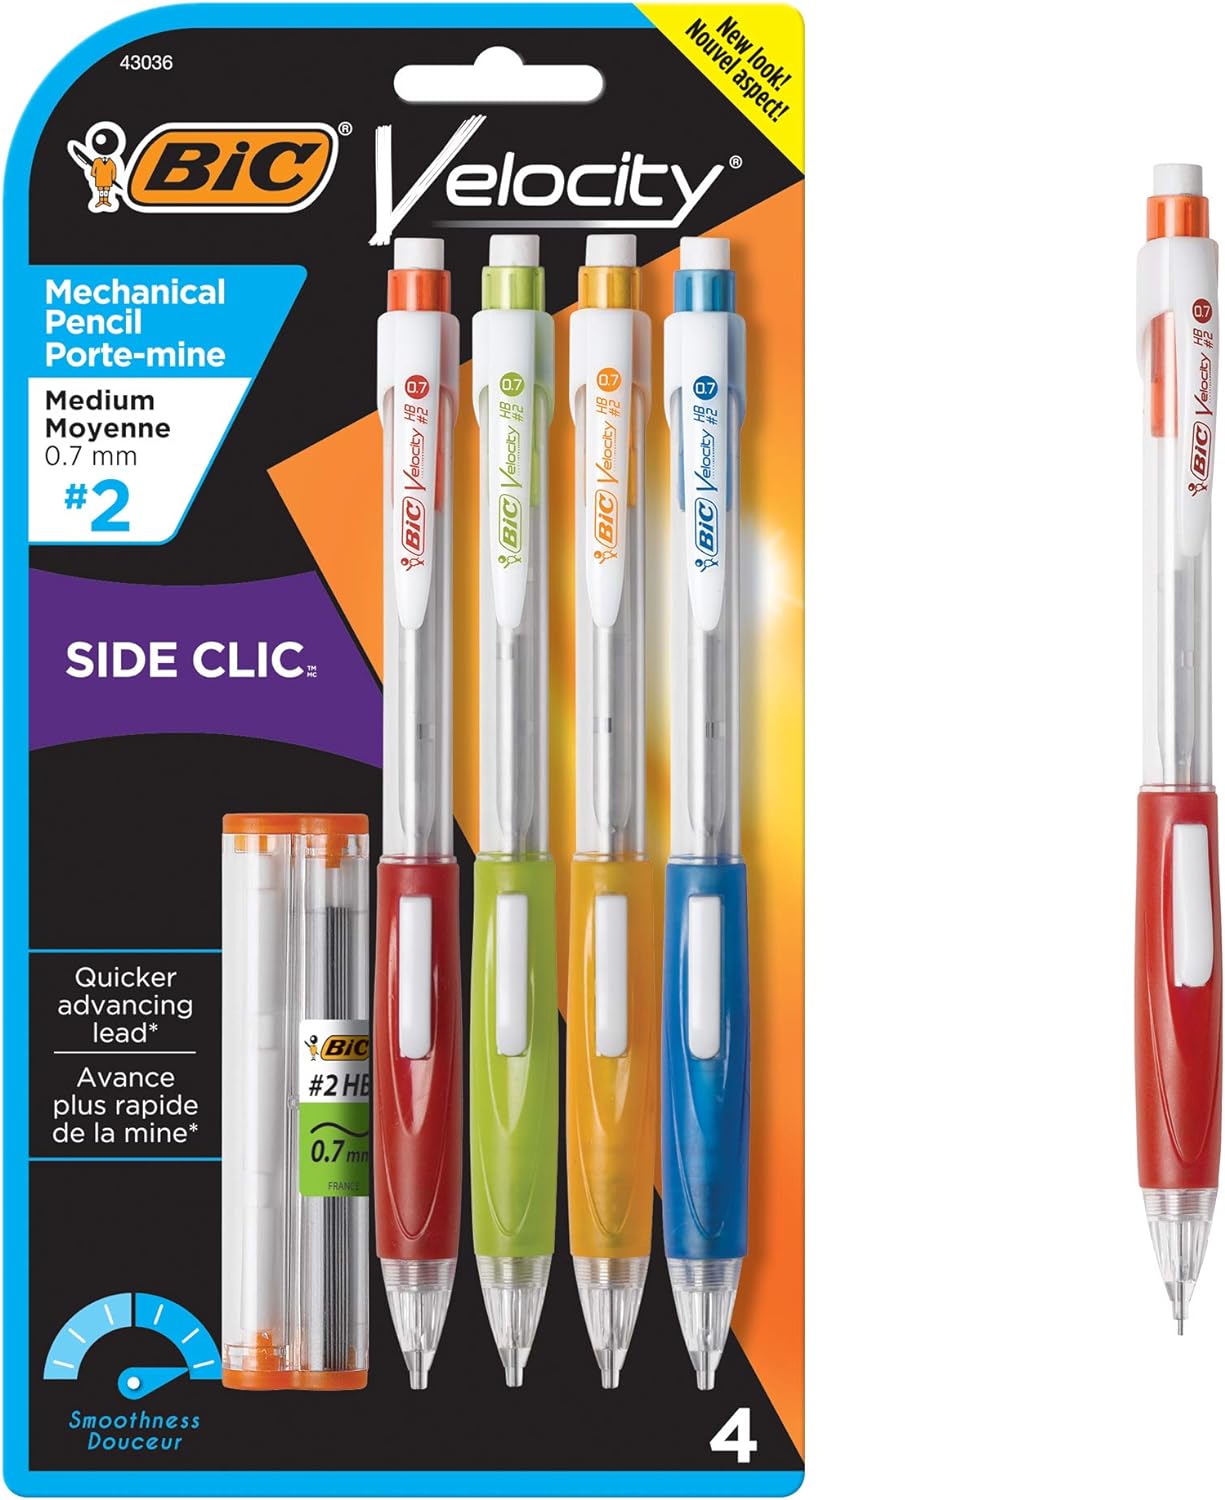 BIC Velocity Side Clic Mechanical Pencil, Medium Point (0.7mm), Black, Soft Comfortable Grip, 4-Count